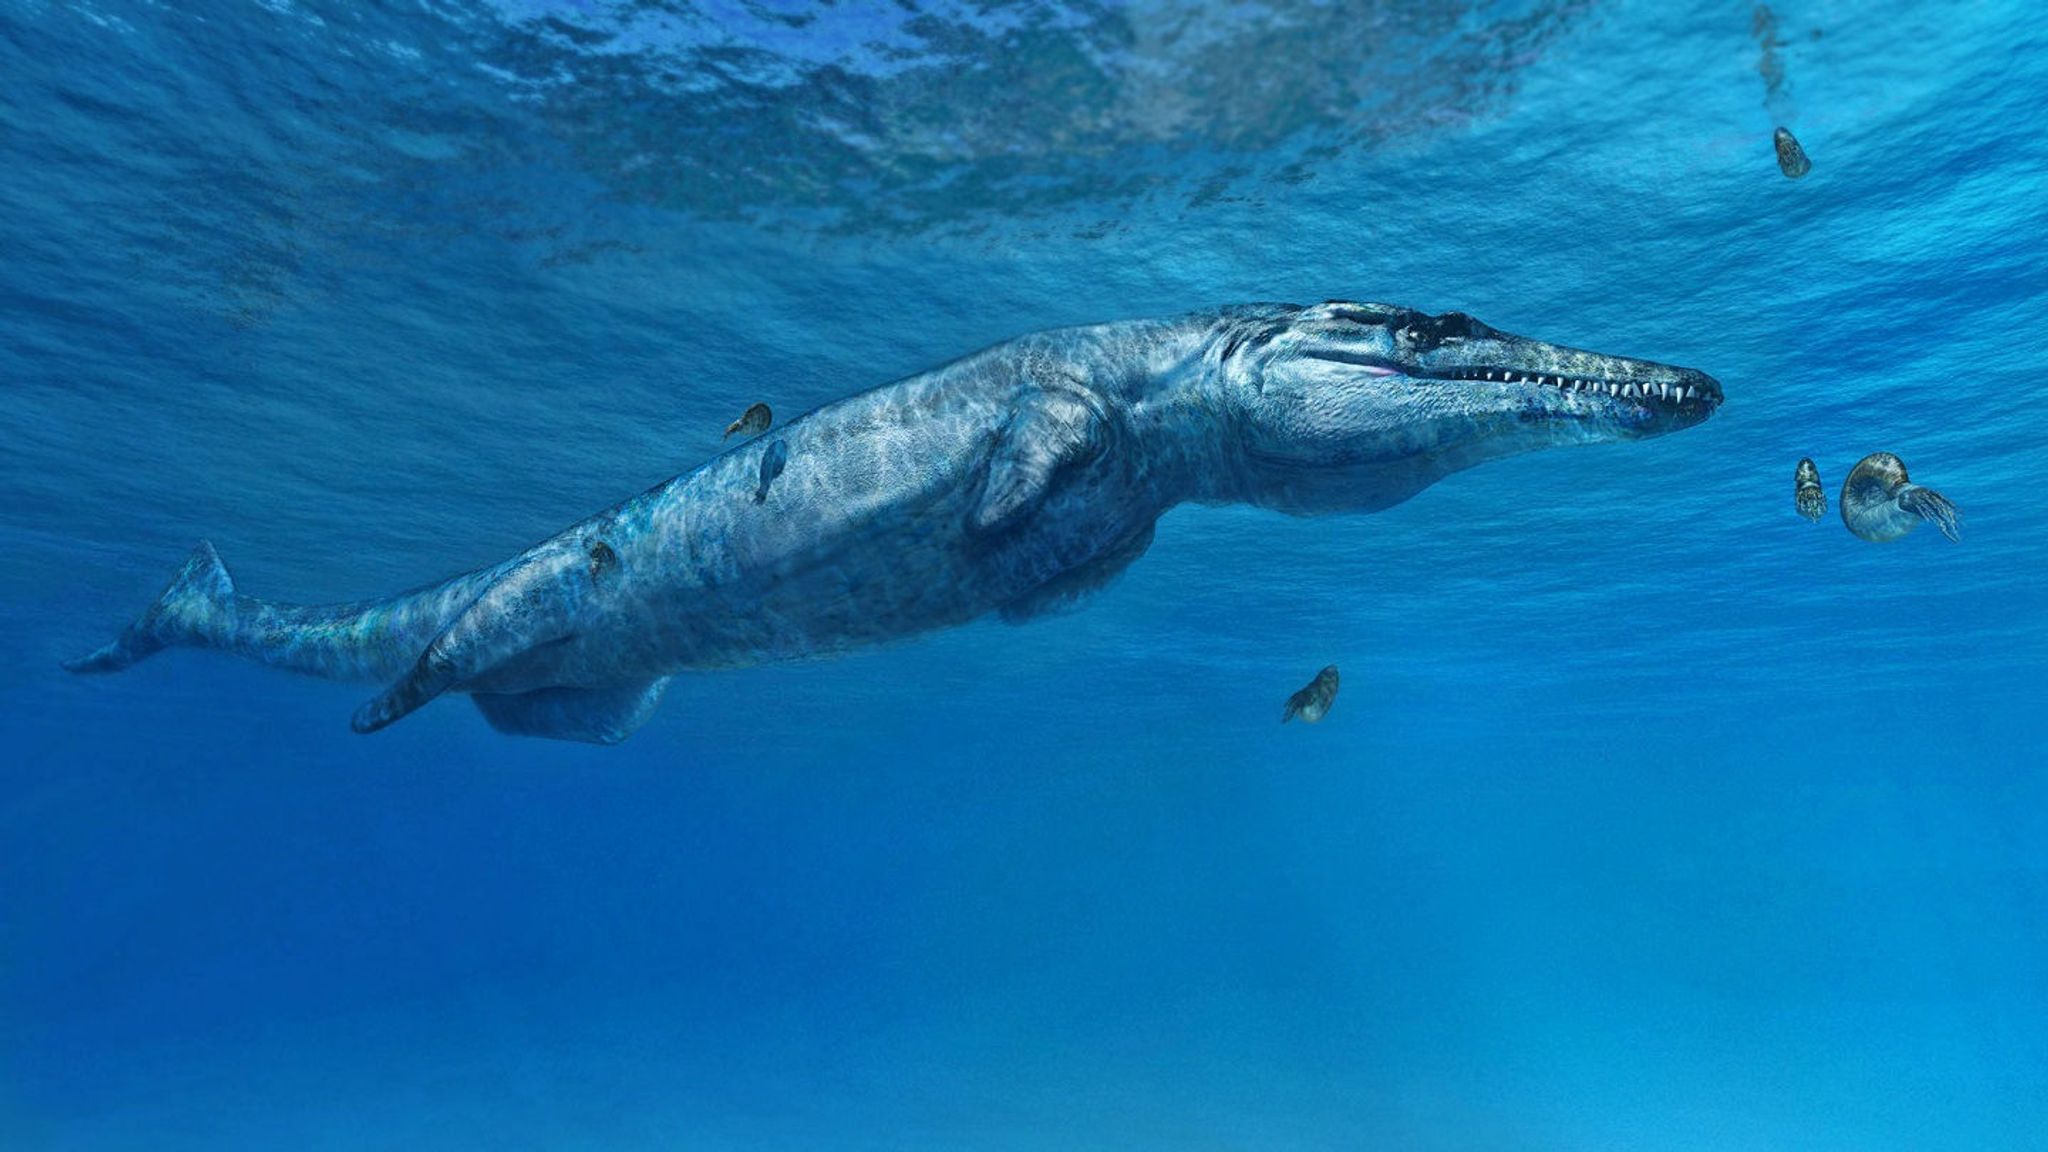 real prehistoric sea monsters